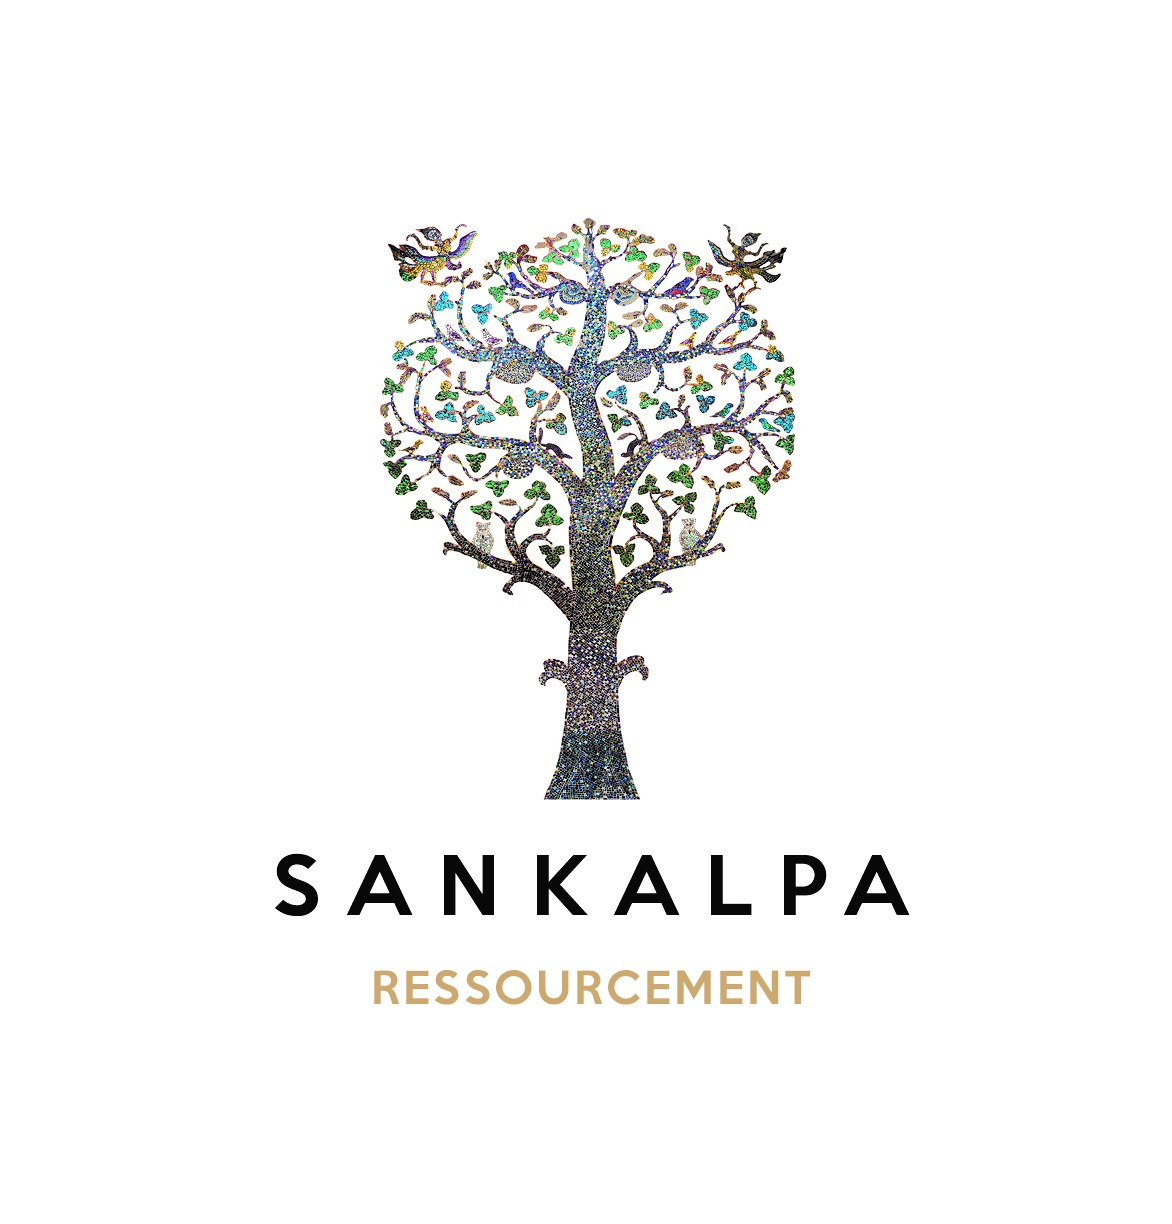 Sankalpa ressourcement